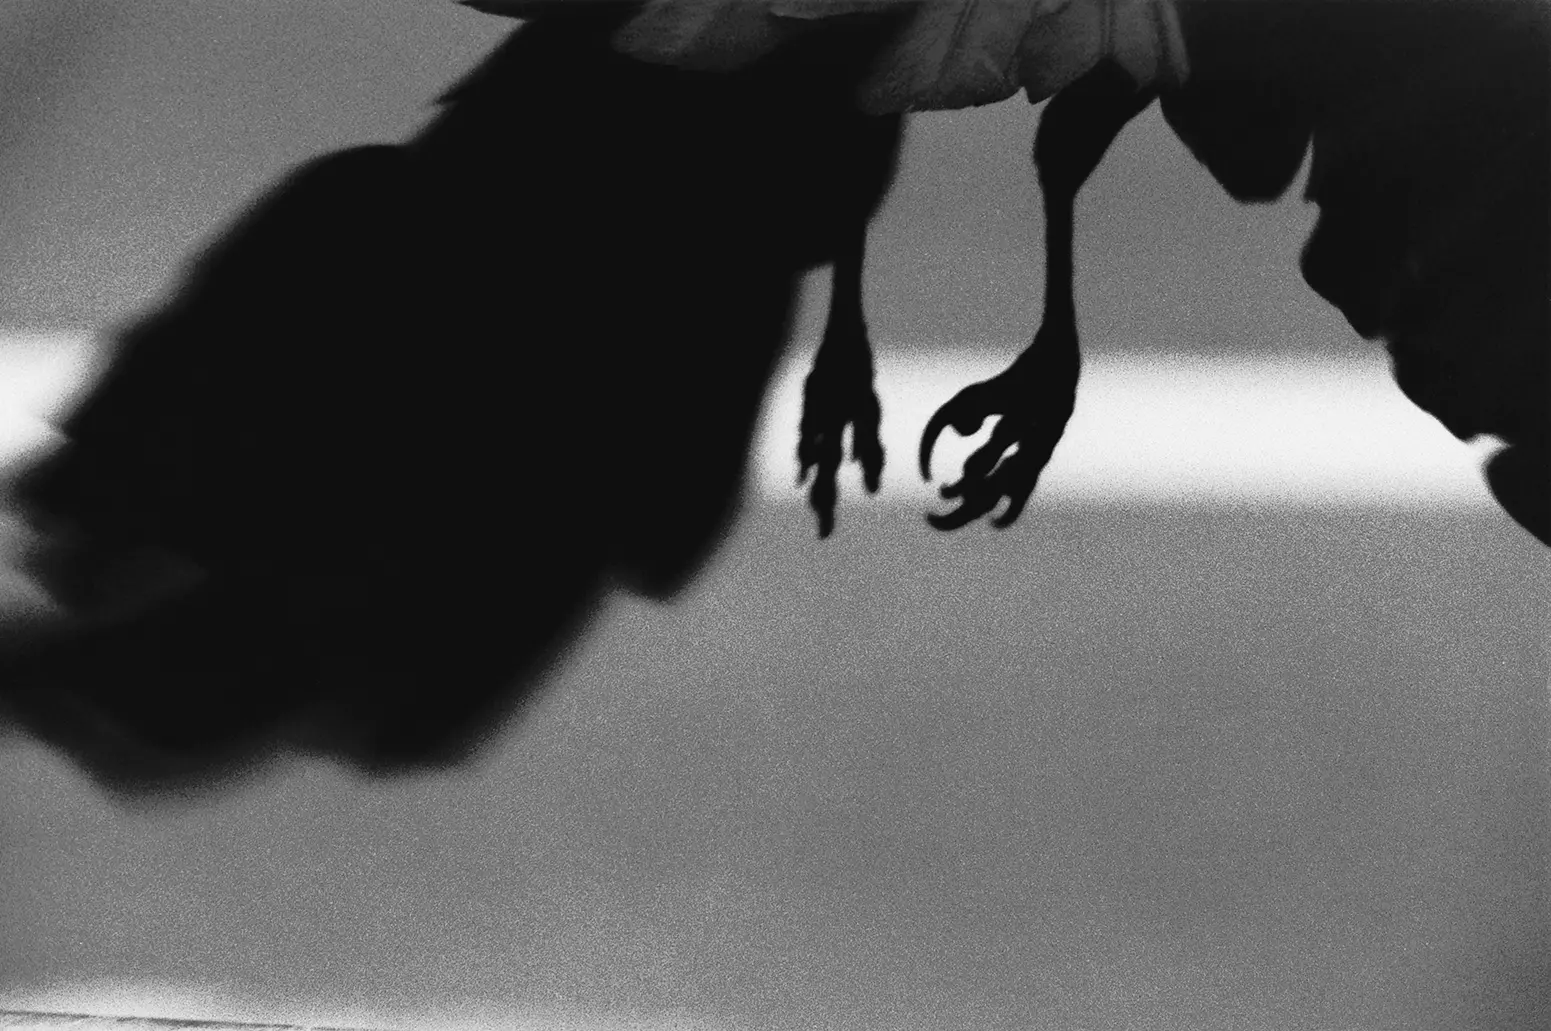 Masahisa Fukase — The Solitude of Ravens